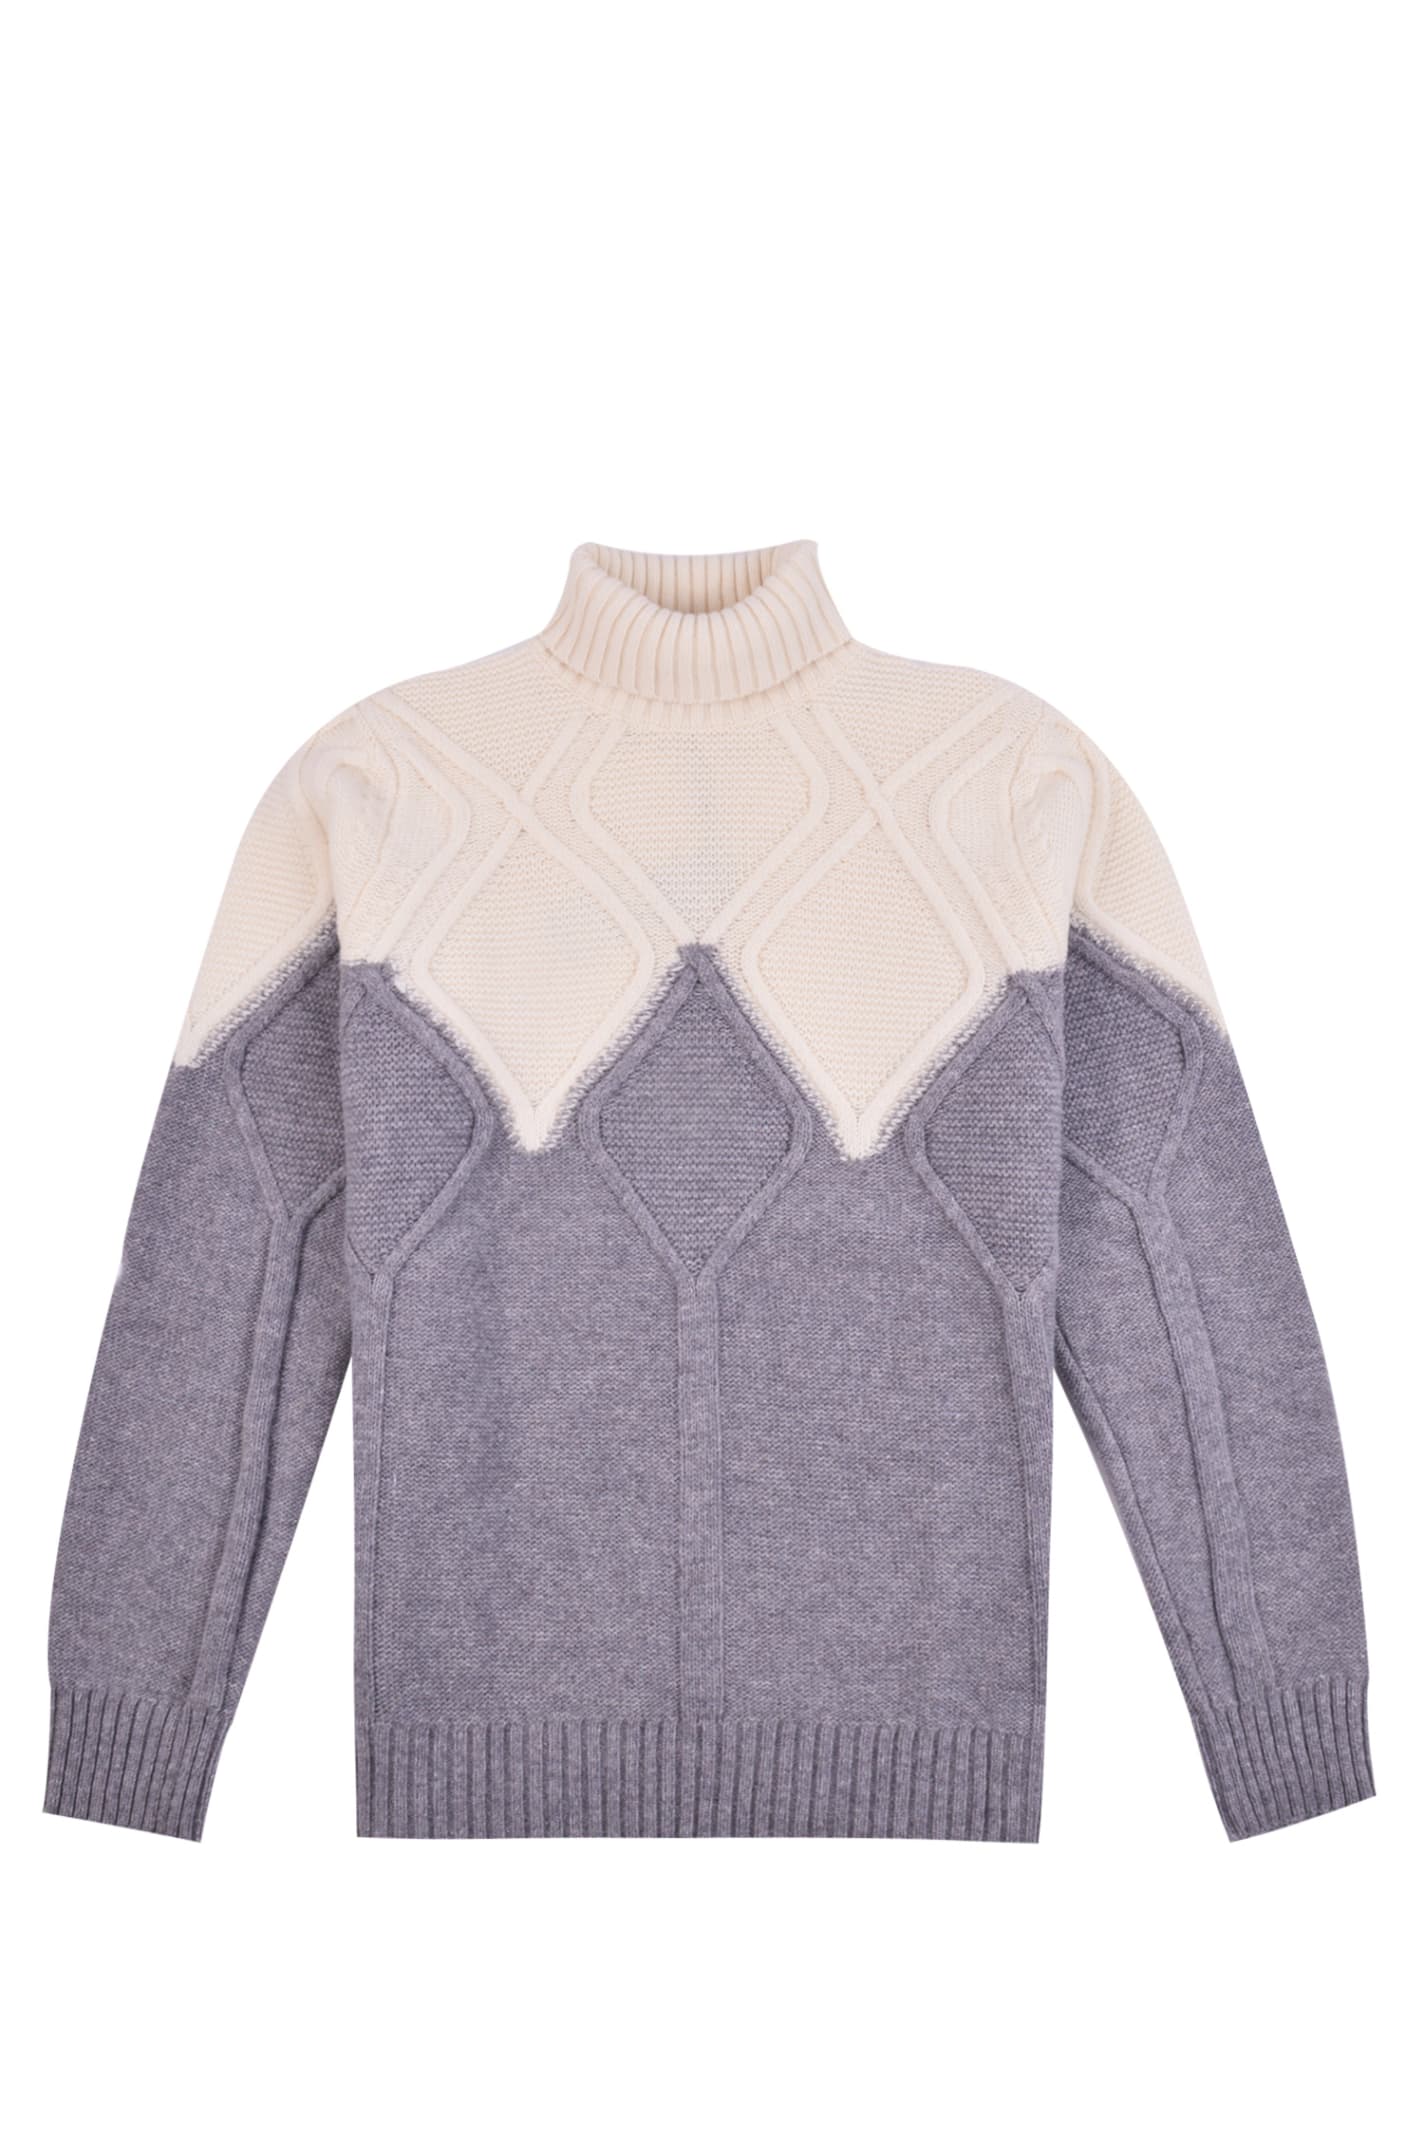 Daniele Alessandrini Two-tone Wool Sweater